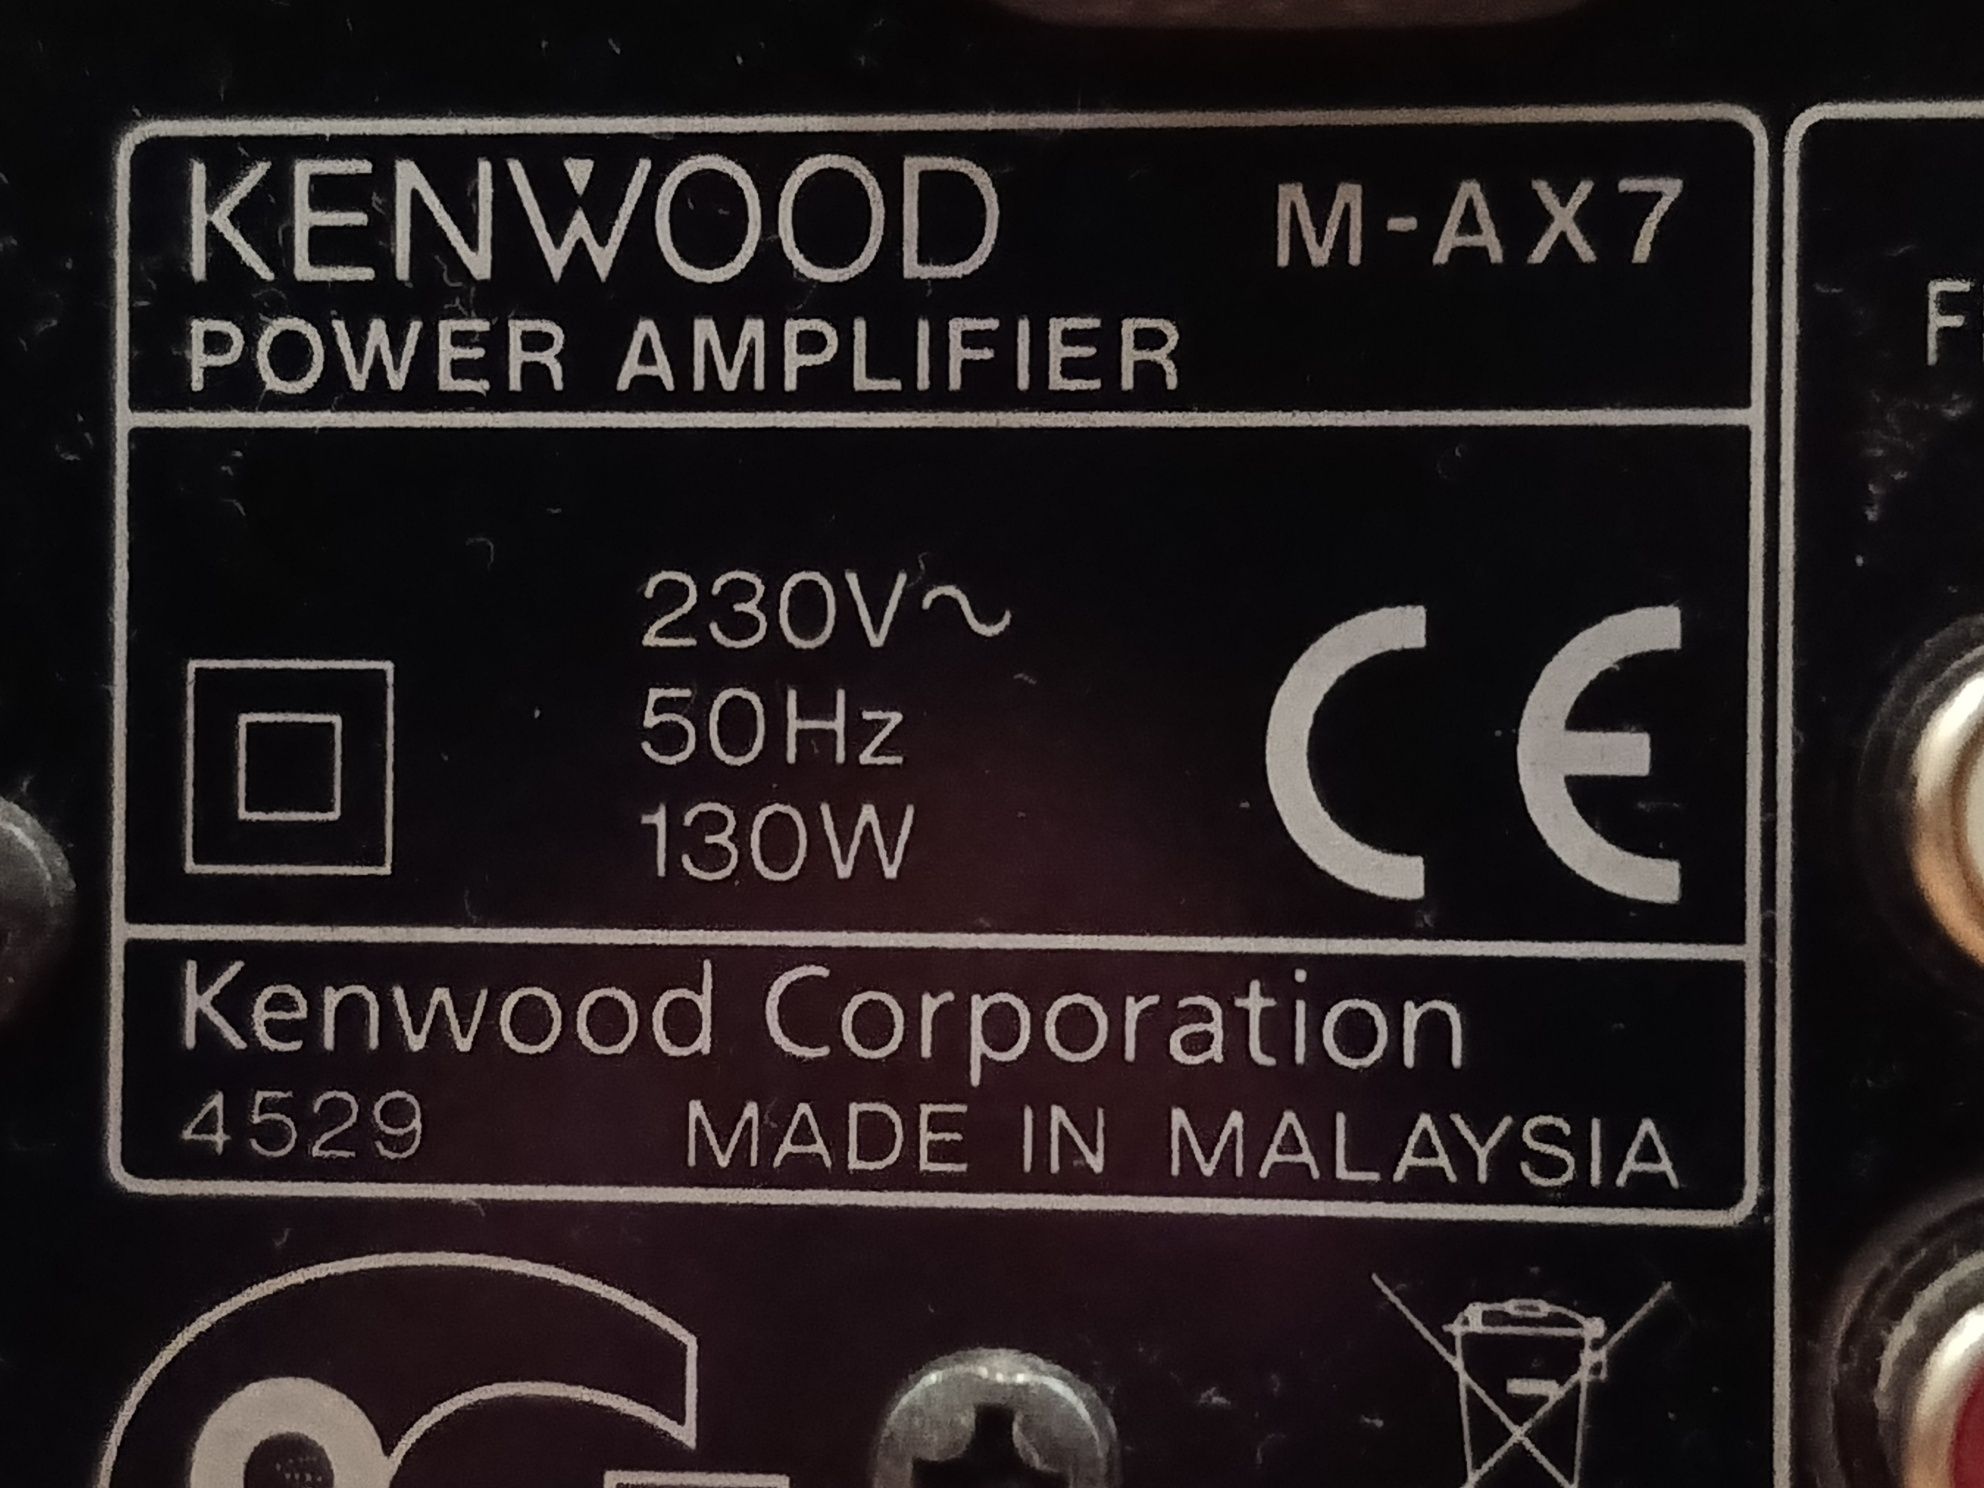 Kenwood AX-7 Stereo/Surround комплект